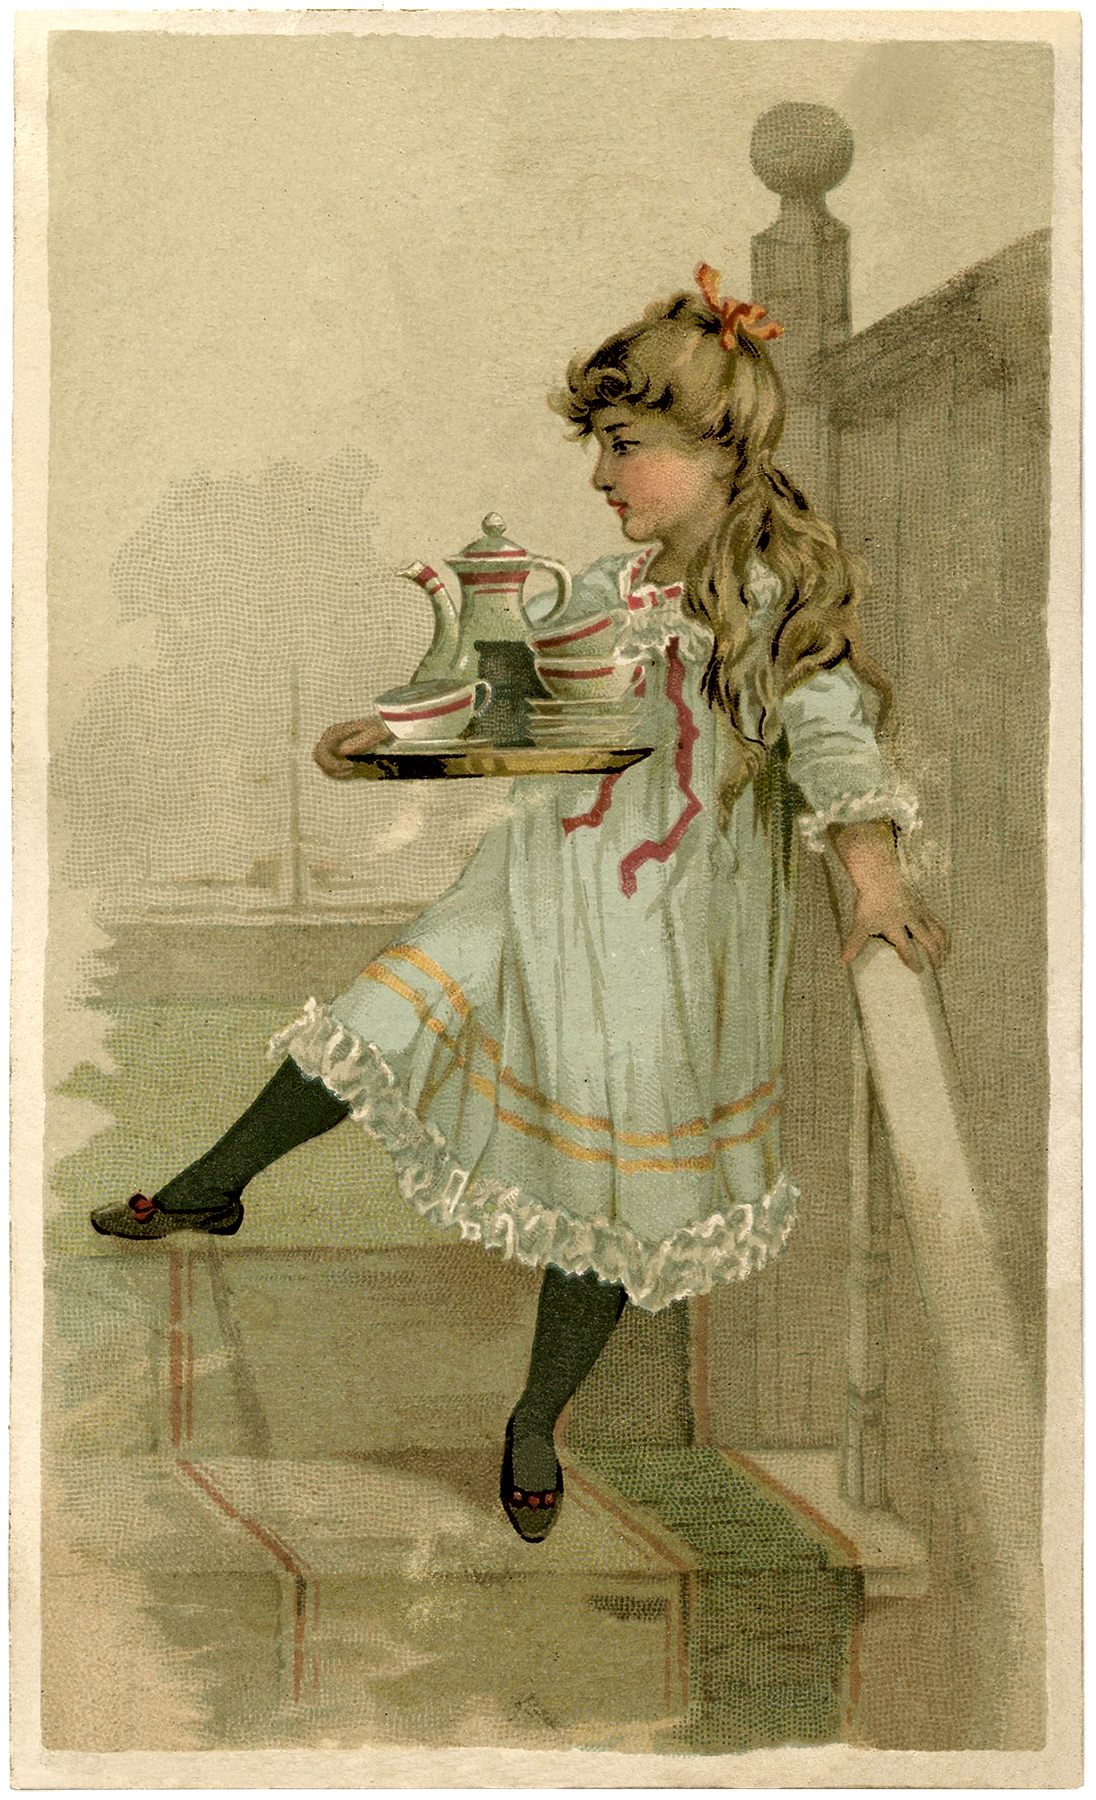 Lovely Vintage Tea Set Girl Image! - The Graphics Fairy